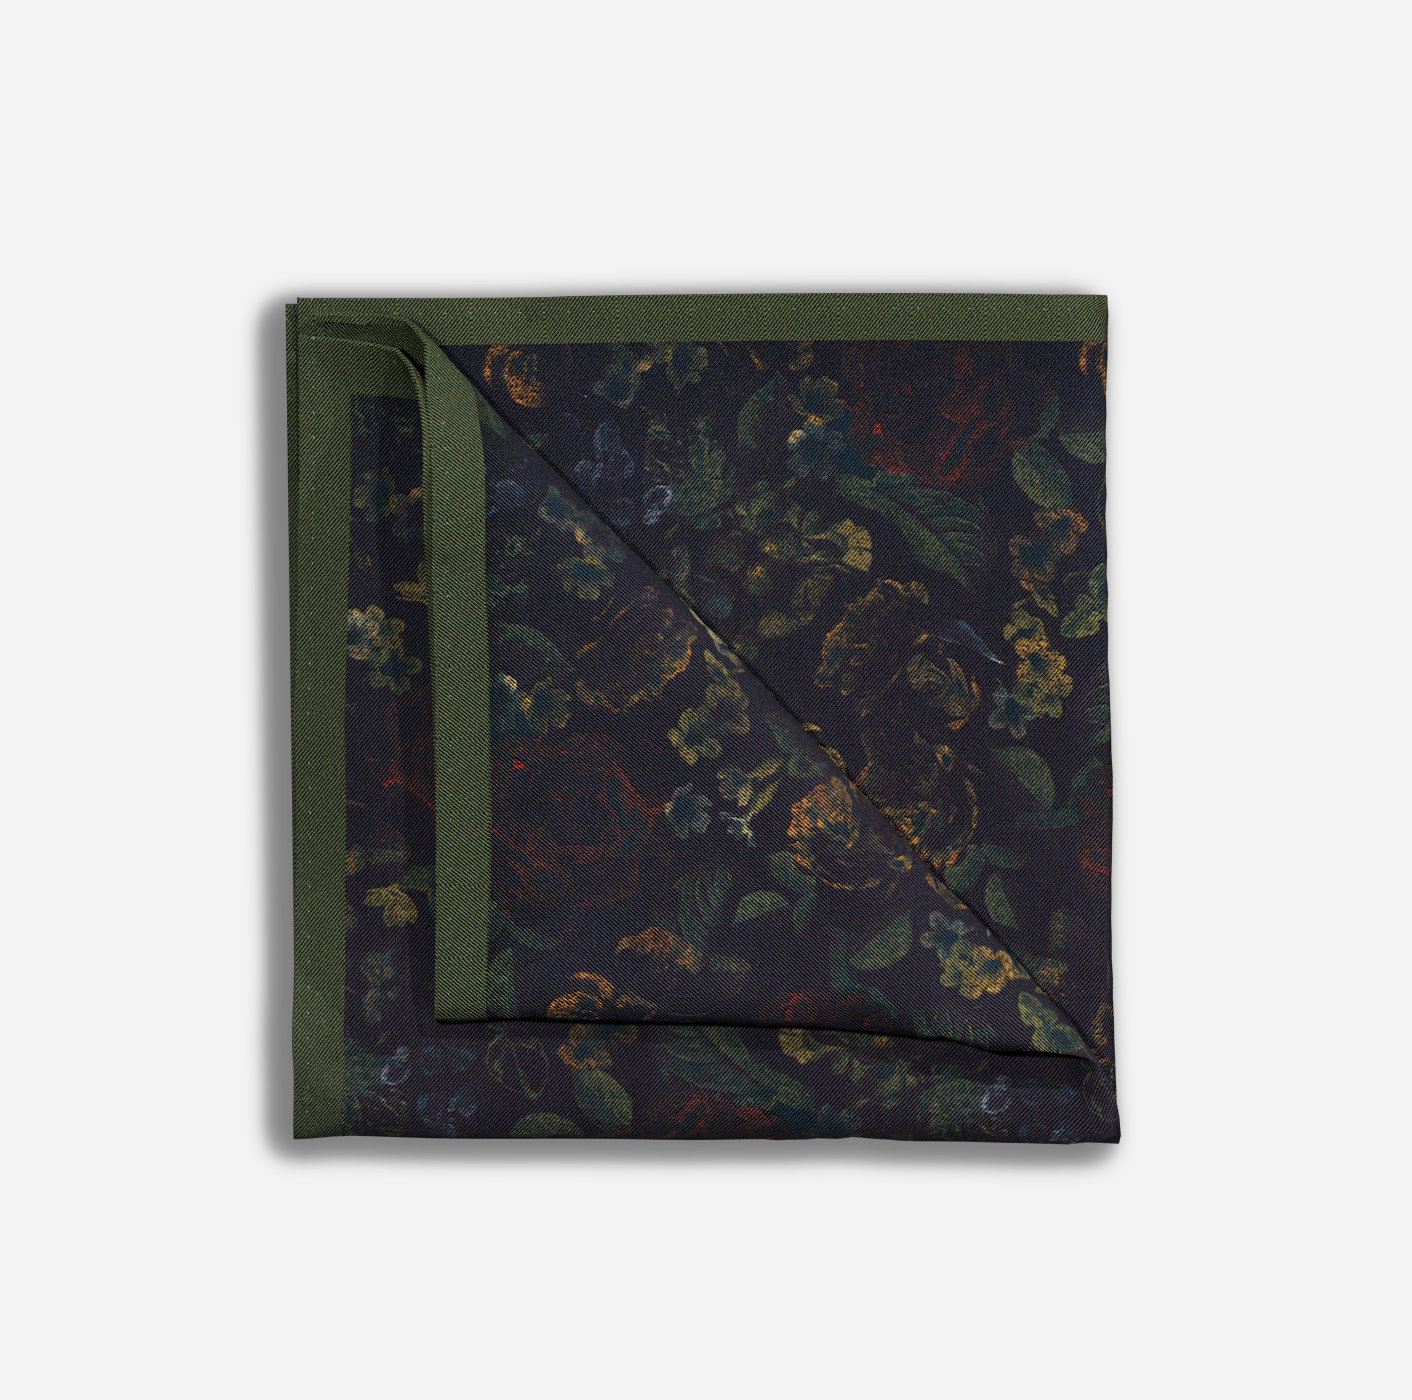 OLYMP Pocket square, 33x33 cm, Marine